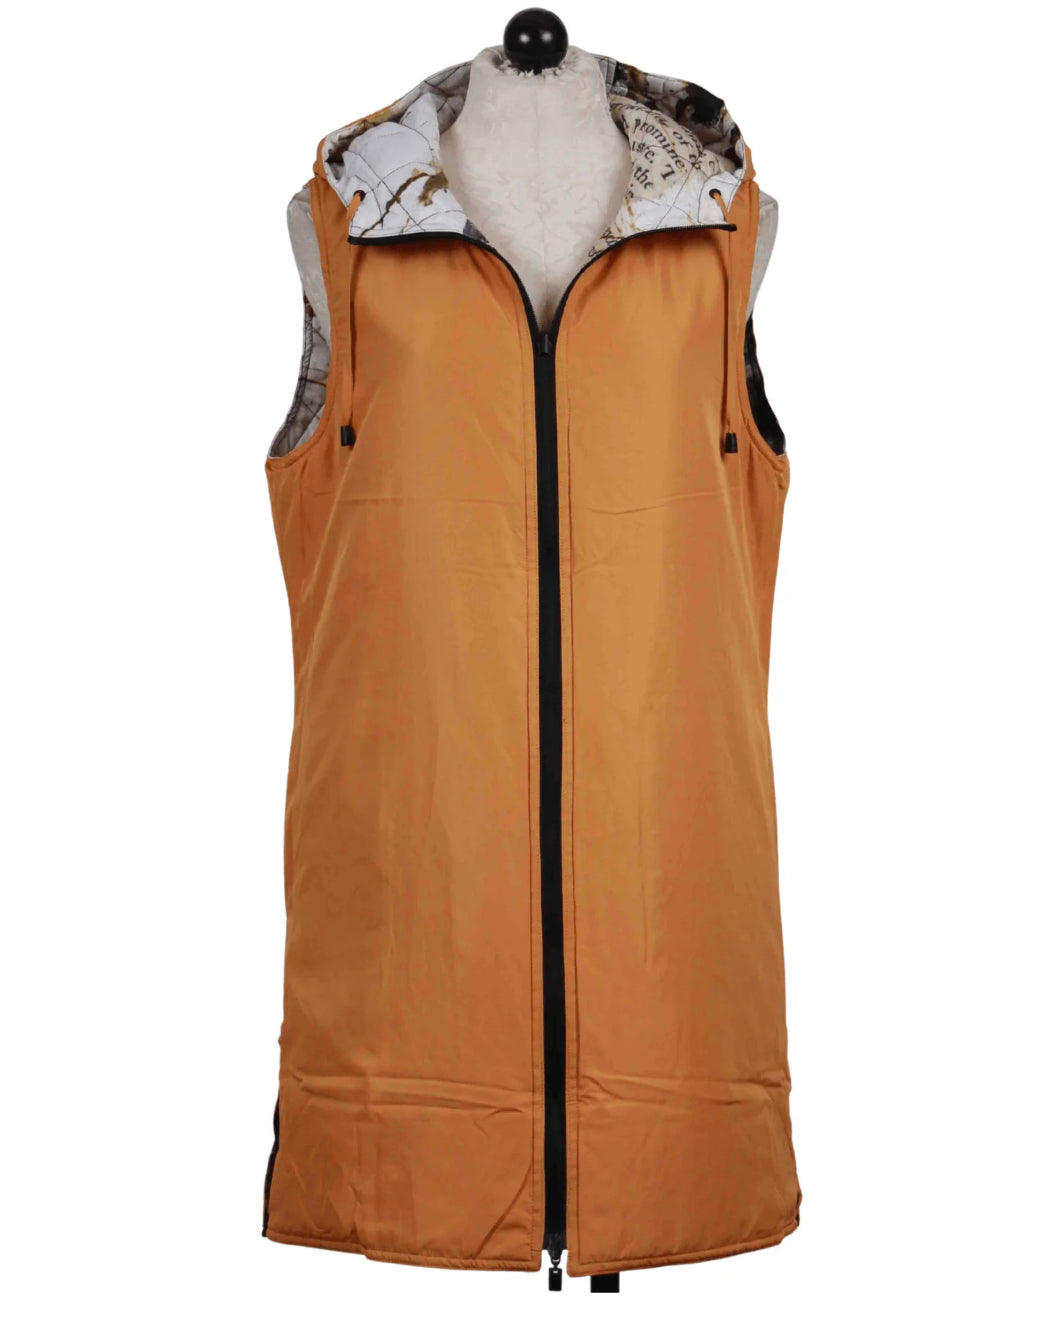 Buy Okane Men Nylon Solid Grey Reversible Sleeveless Jacket at Amazon.in